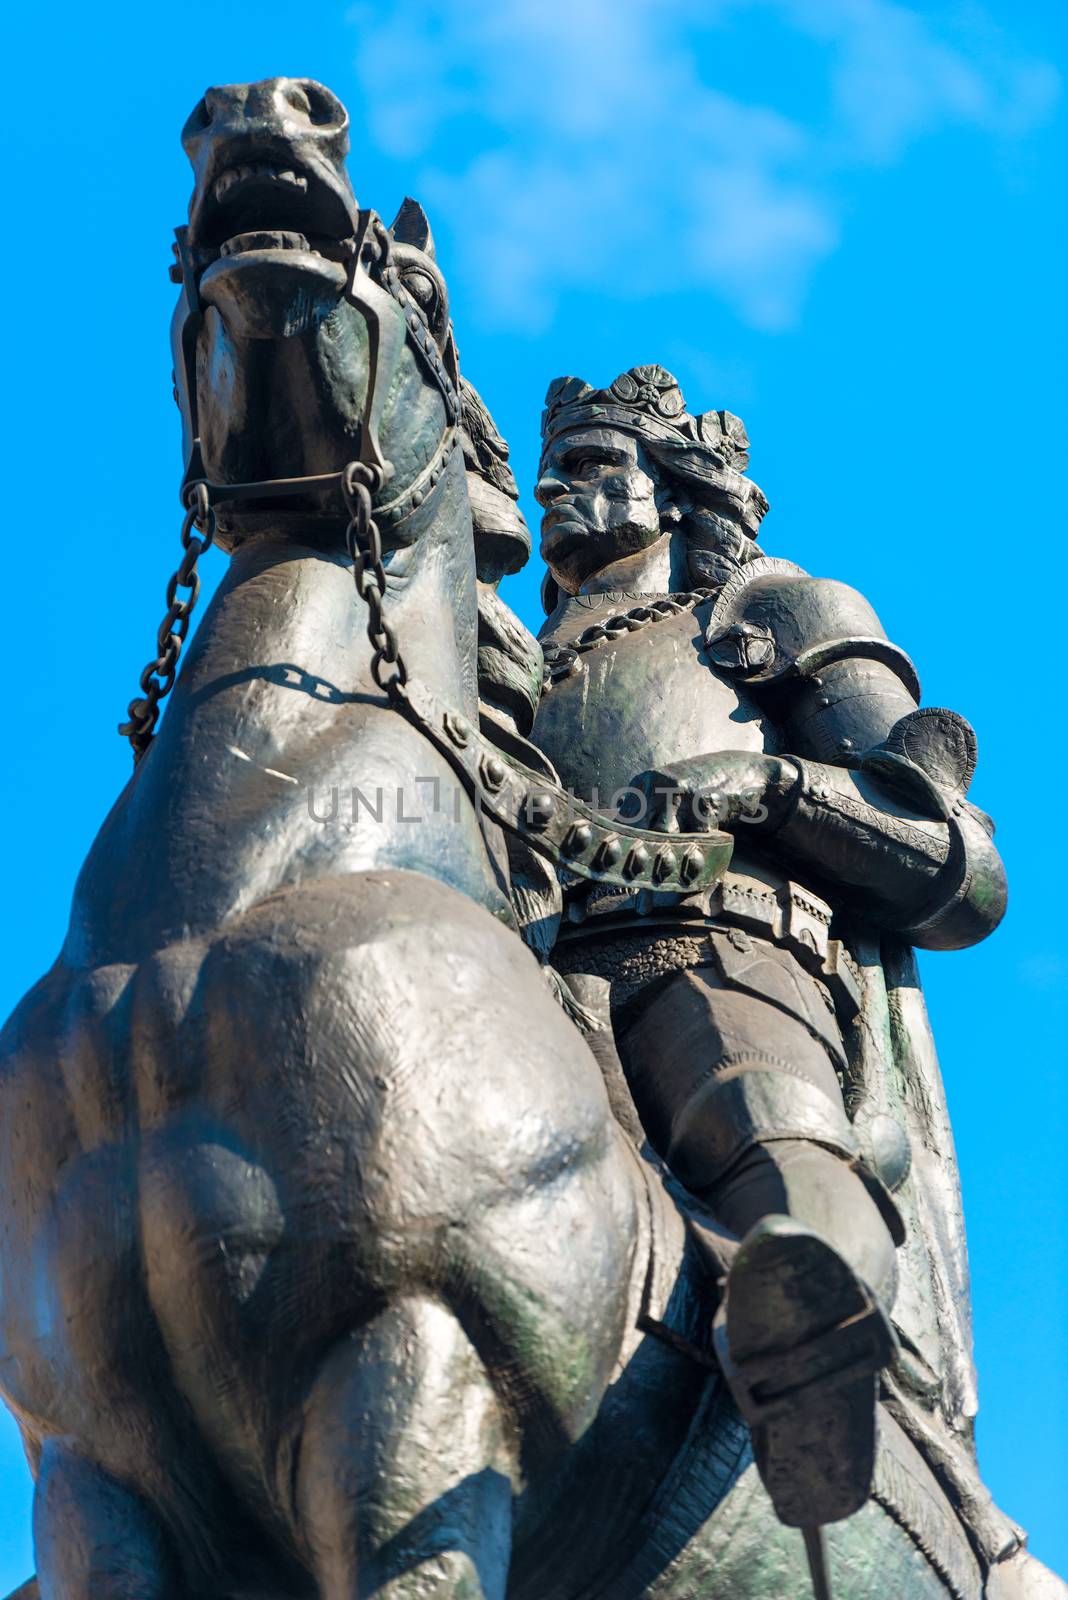 close-up Grunwald on horseback - a monument in Krakow by kosmsos111